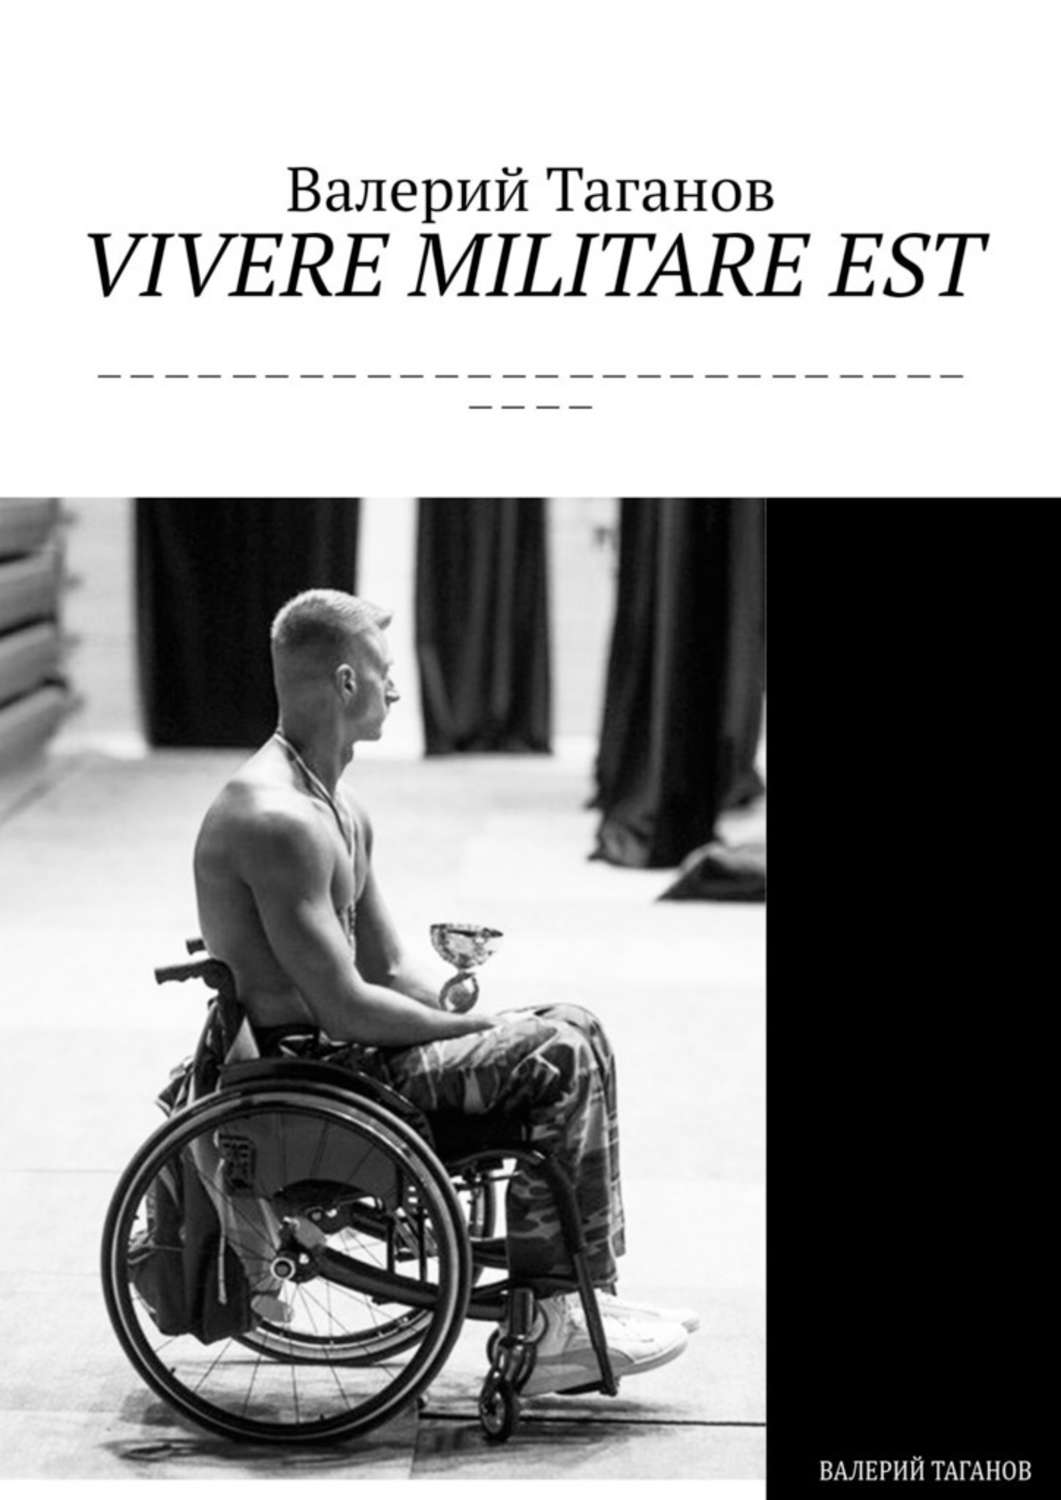 Est militare. Vivere Militare est жить значит бороться. Vivere Militare est тату. Vivere est Militare фото.